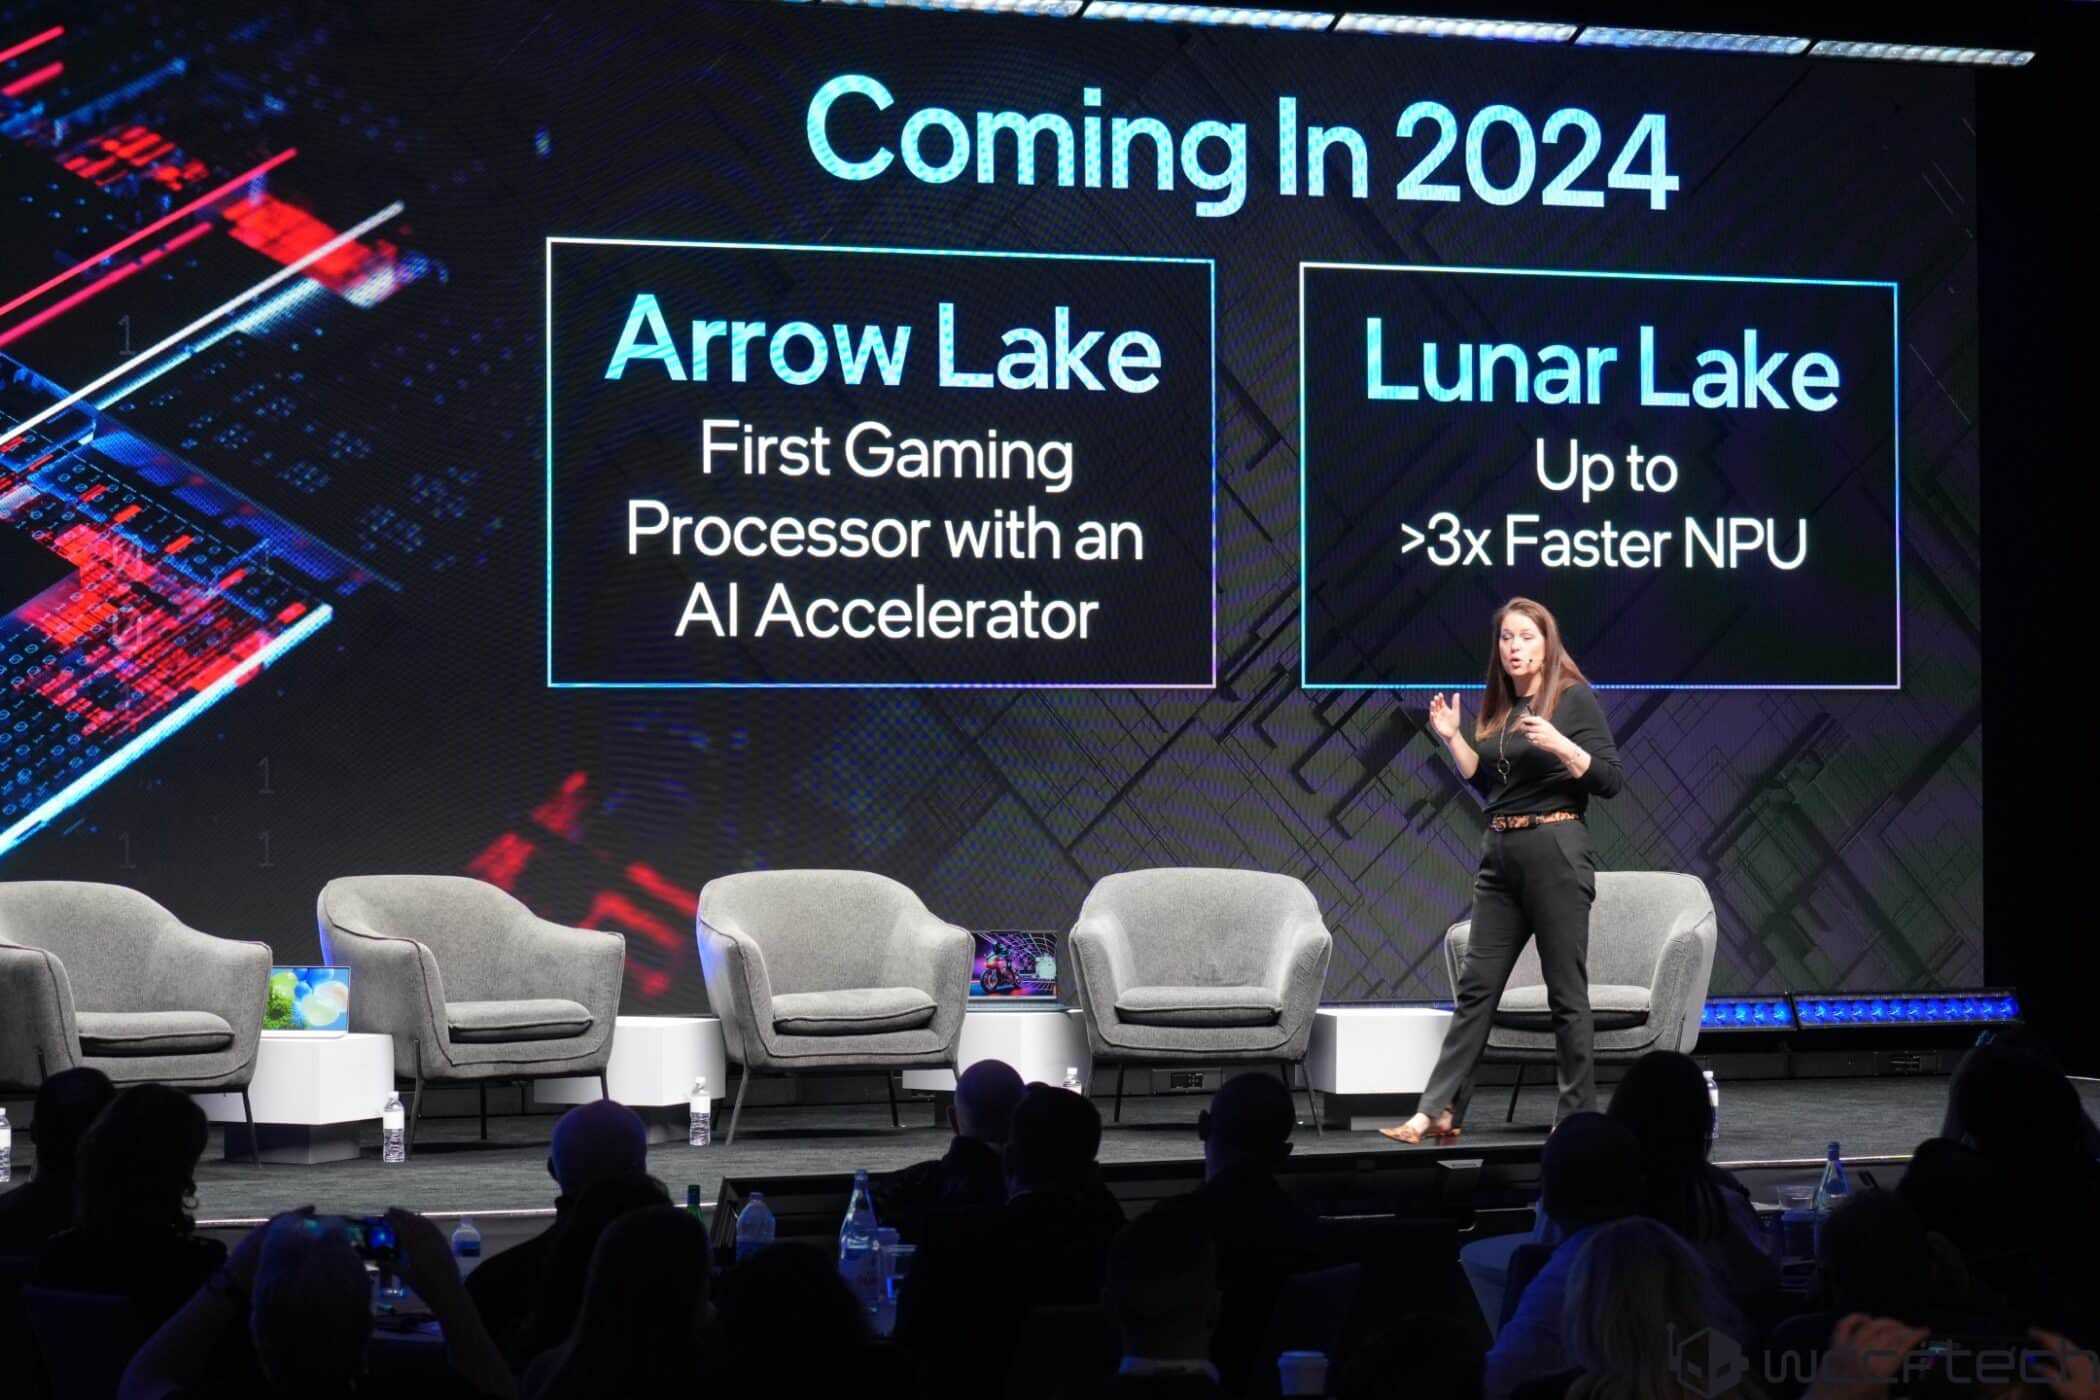 Intel「Arrow Lake」と「Lunar Lake」が2024年に登場と改めて表明 – GPUとNPUの両方でAI性能が3倍向上